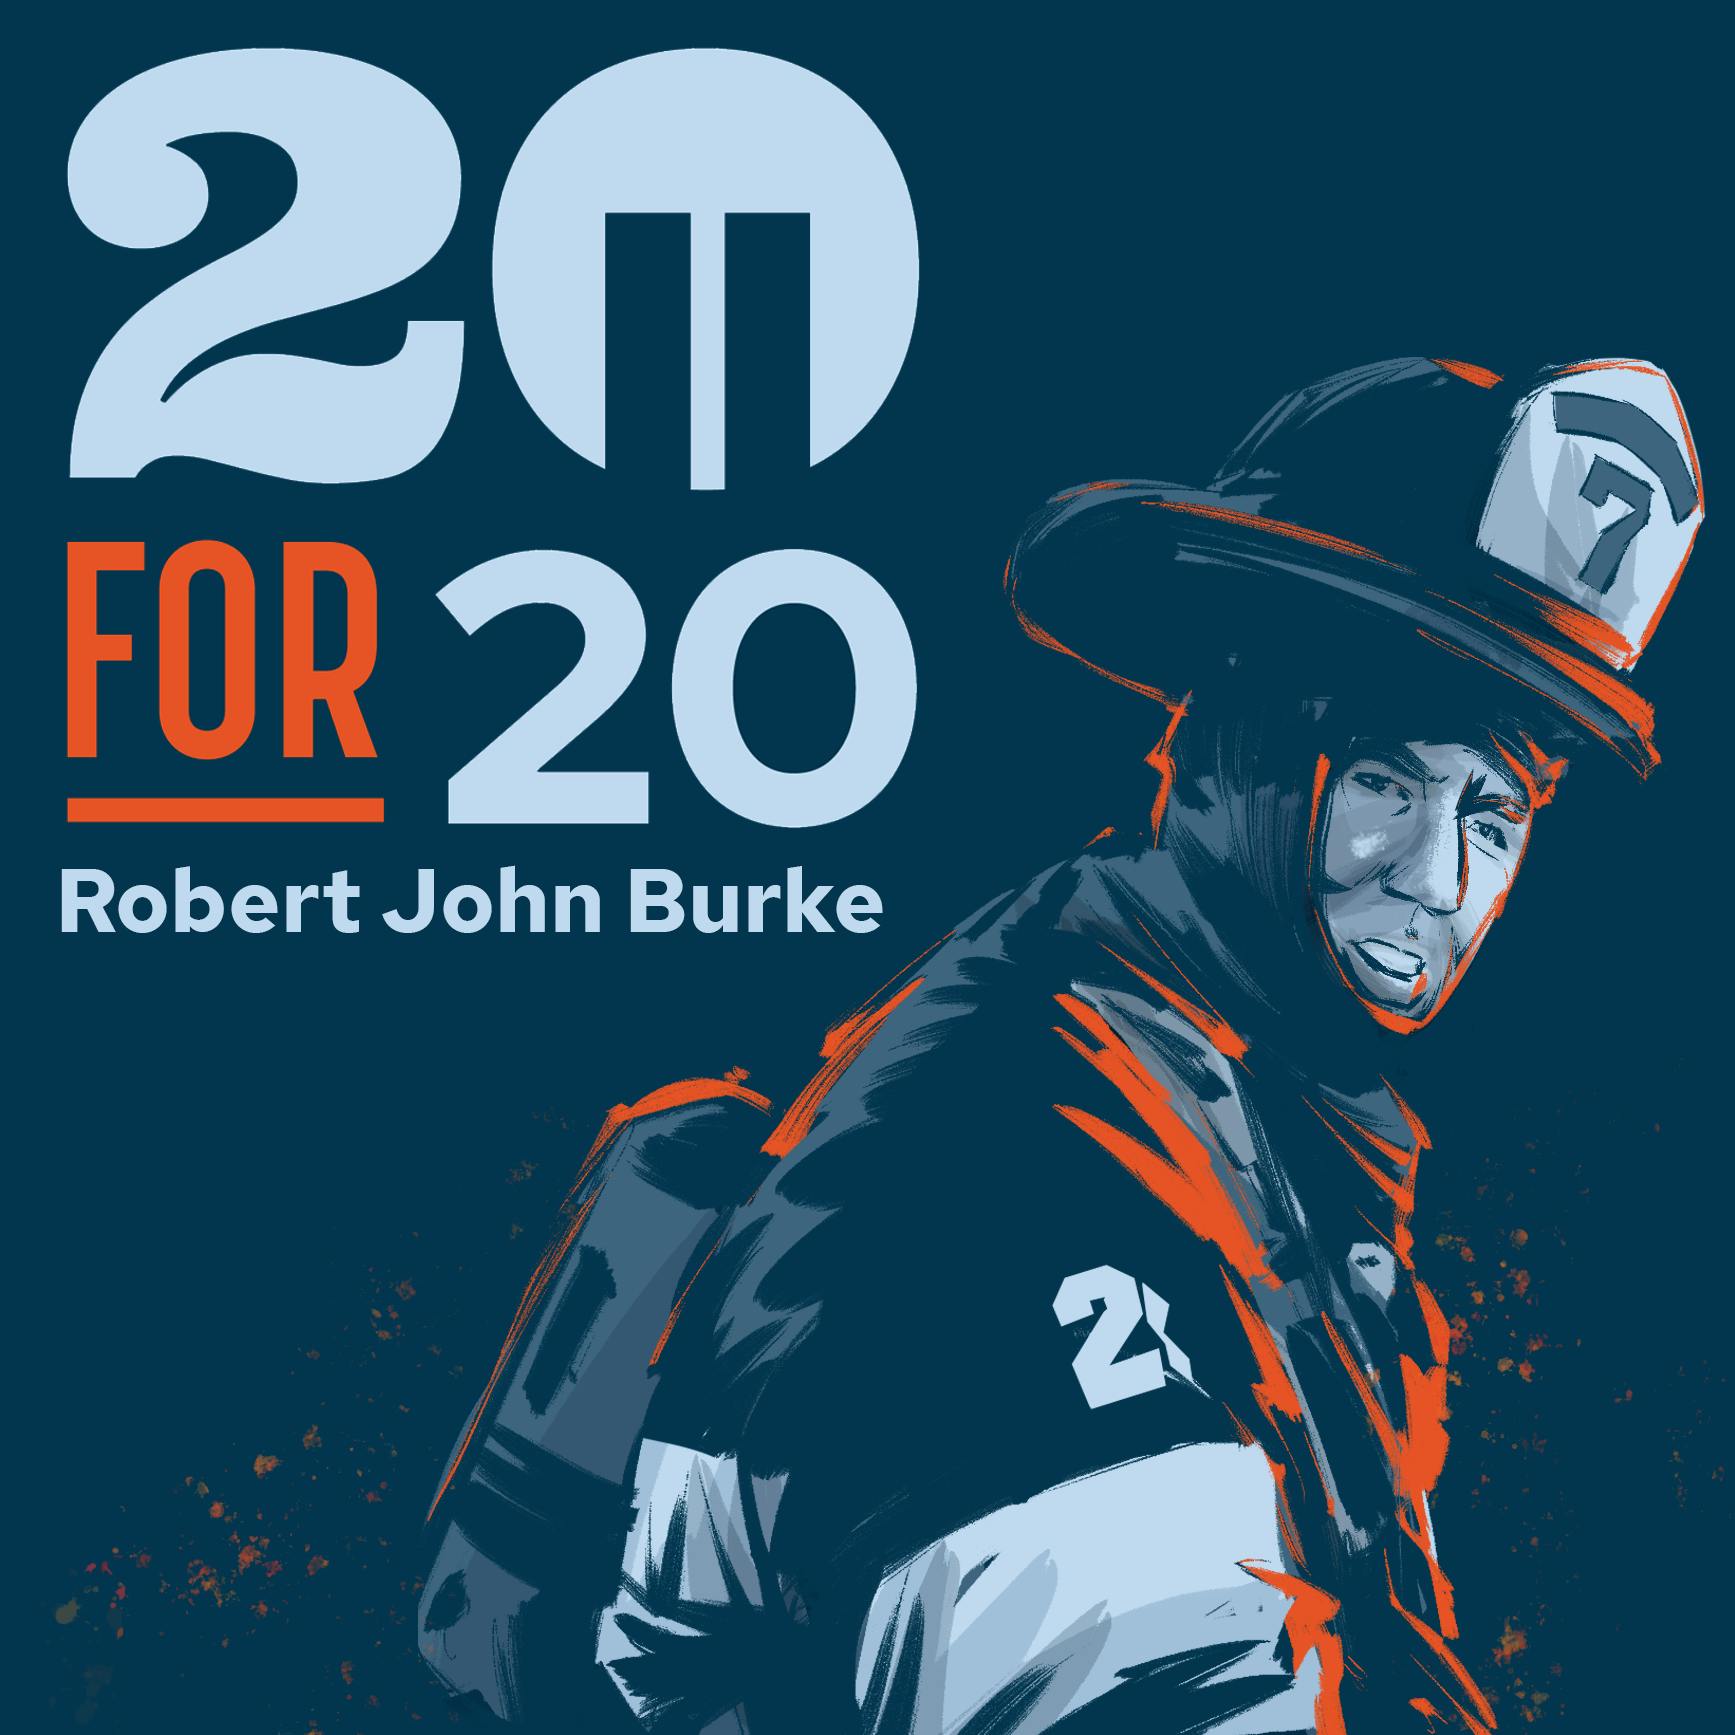 Robert John Burke: The Actor Who Became A Firefighter